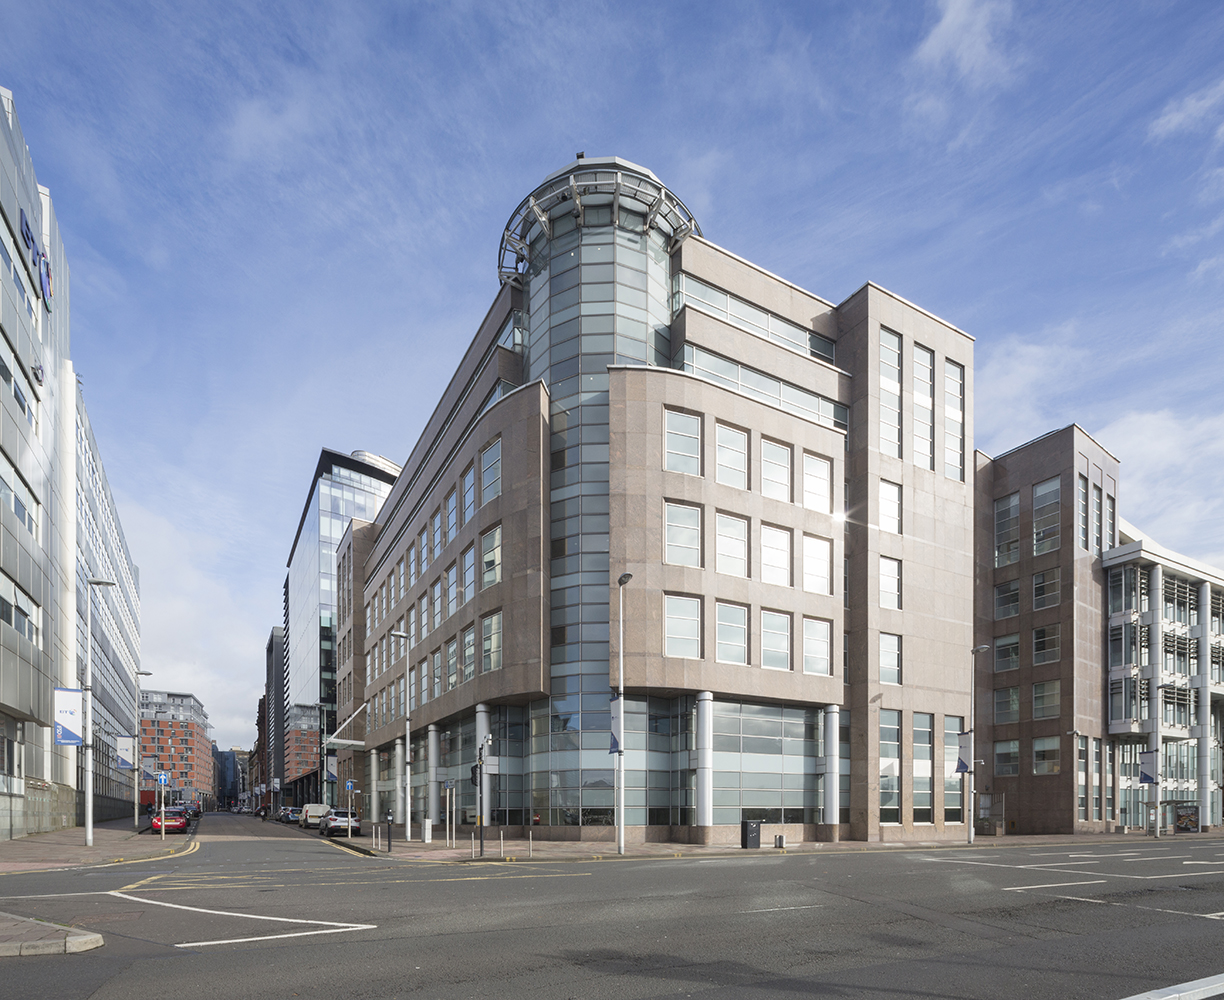 image of Glasgow Tribunal Centre